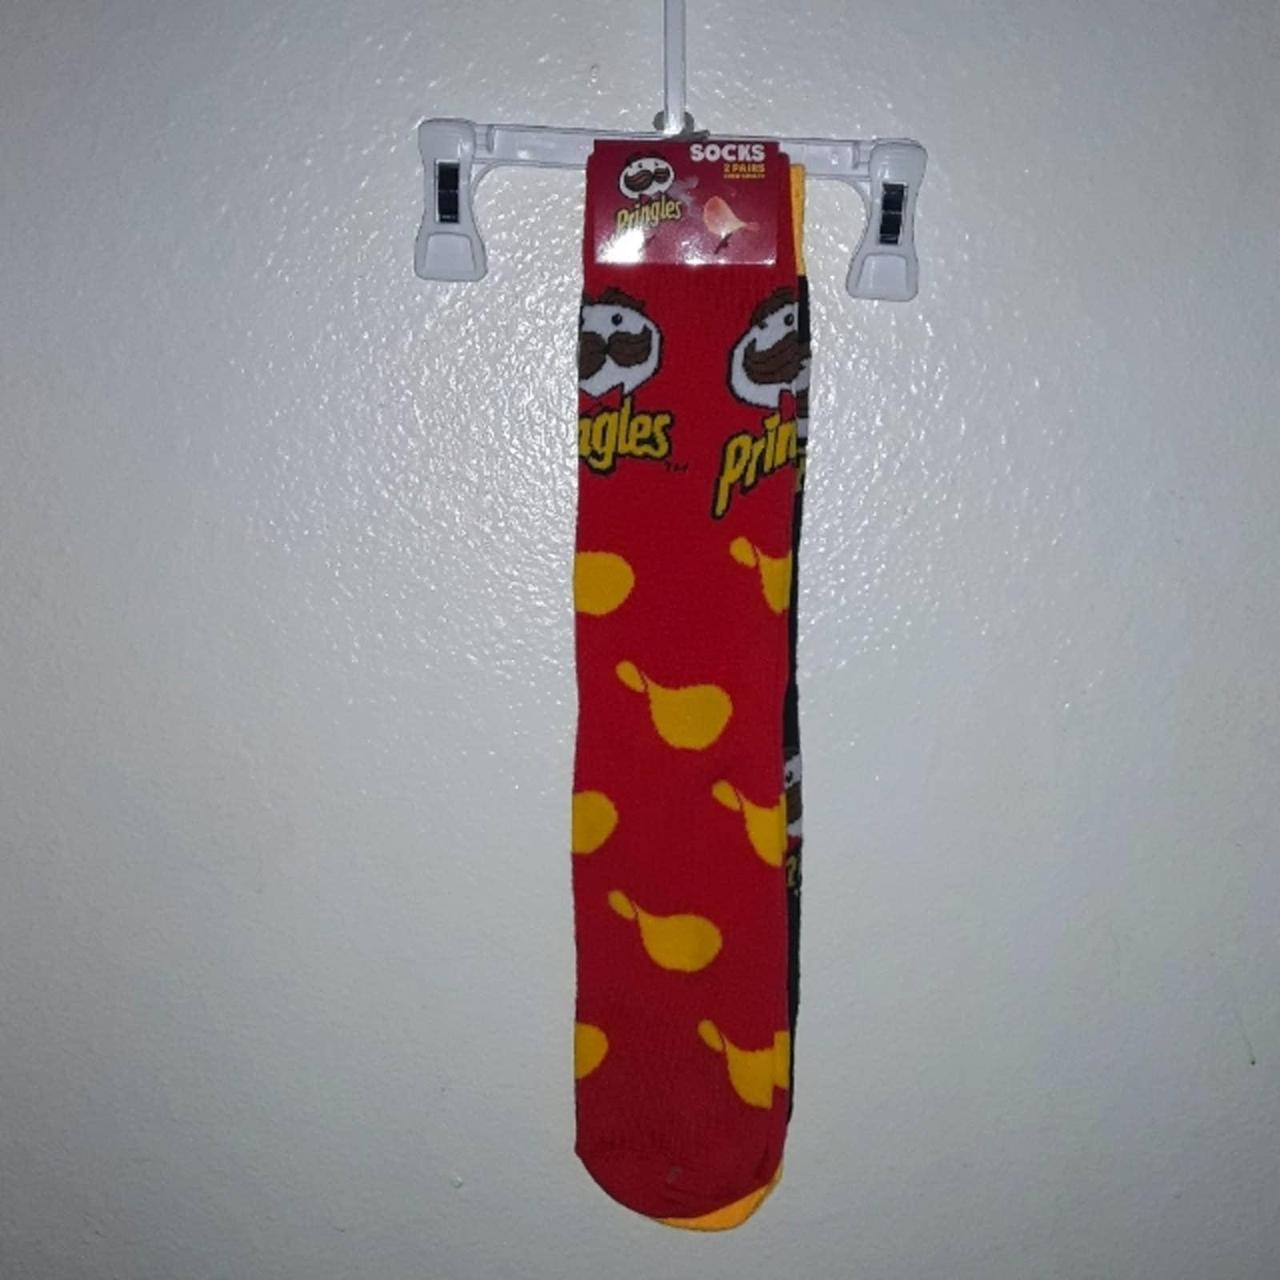 Product Image 1 - Pringles chips socks uni-sex size